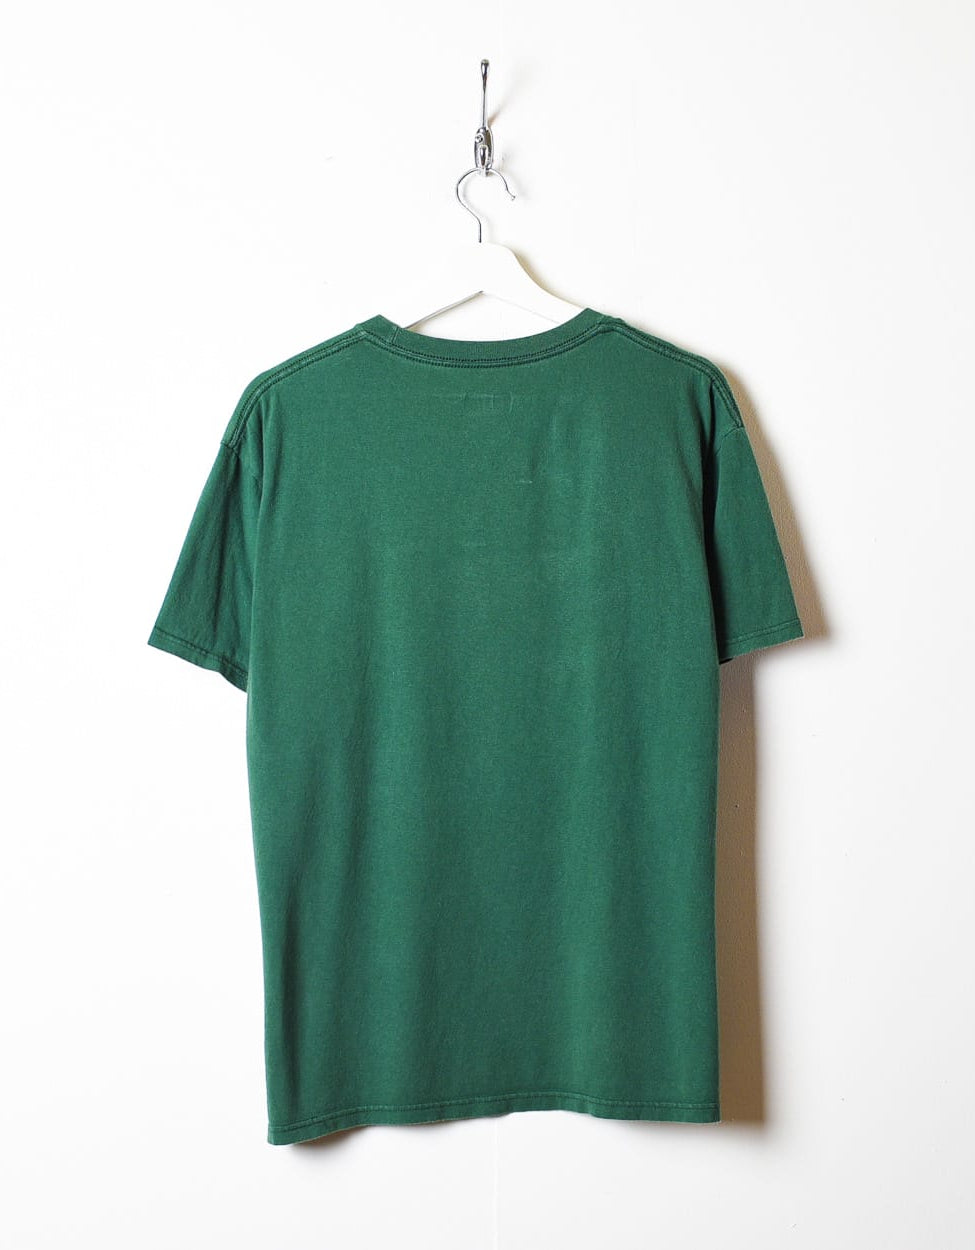 Green Green Bay Packers T-Shirt - Small